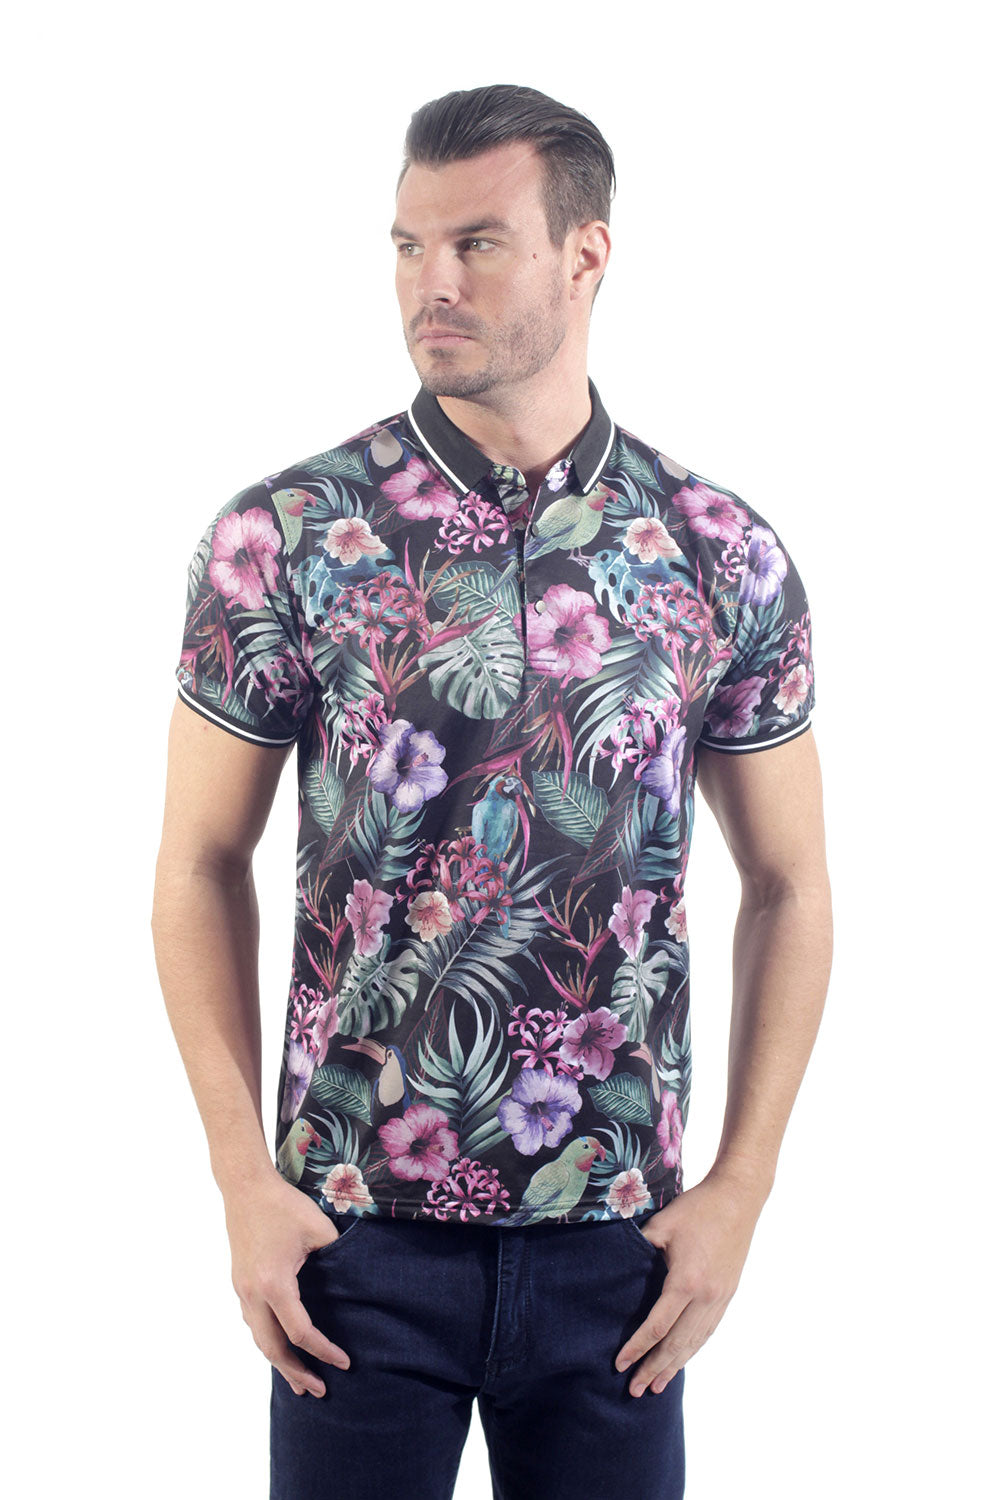 Barabas Men's Floral Print Multi Color Design Graphic Tee Polo Shirts P922